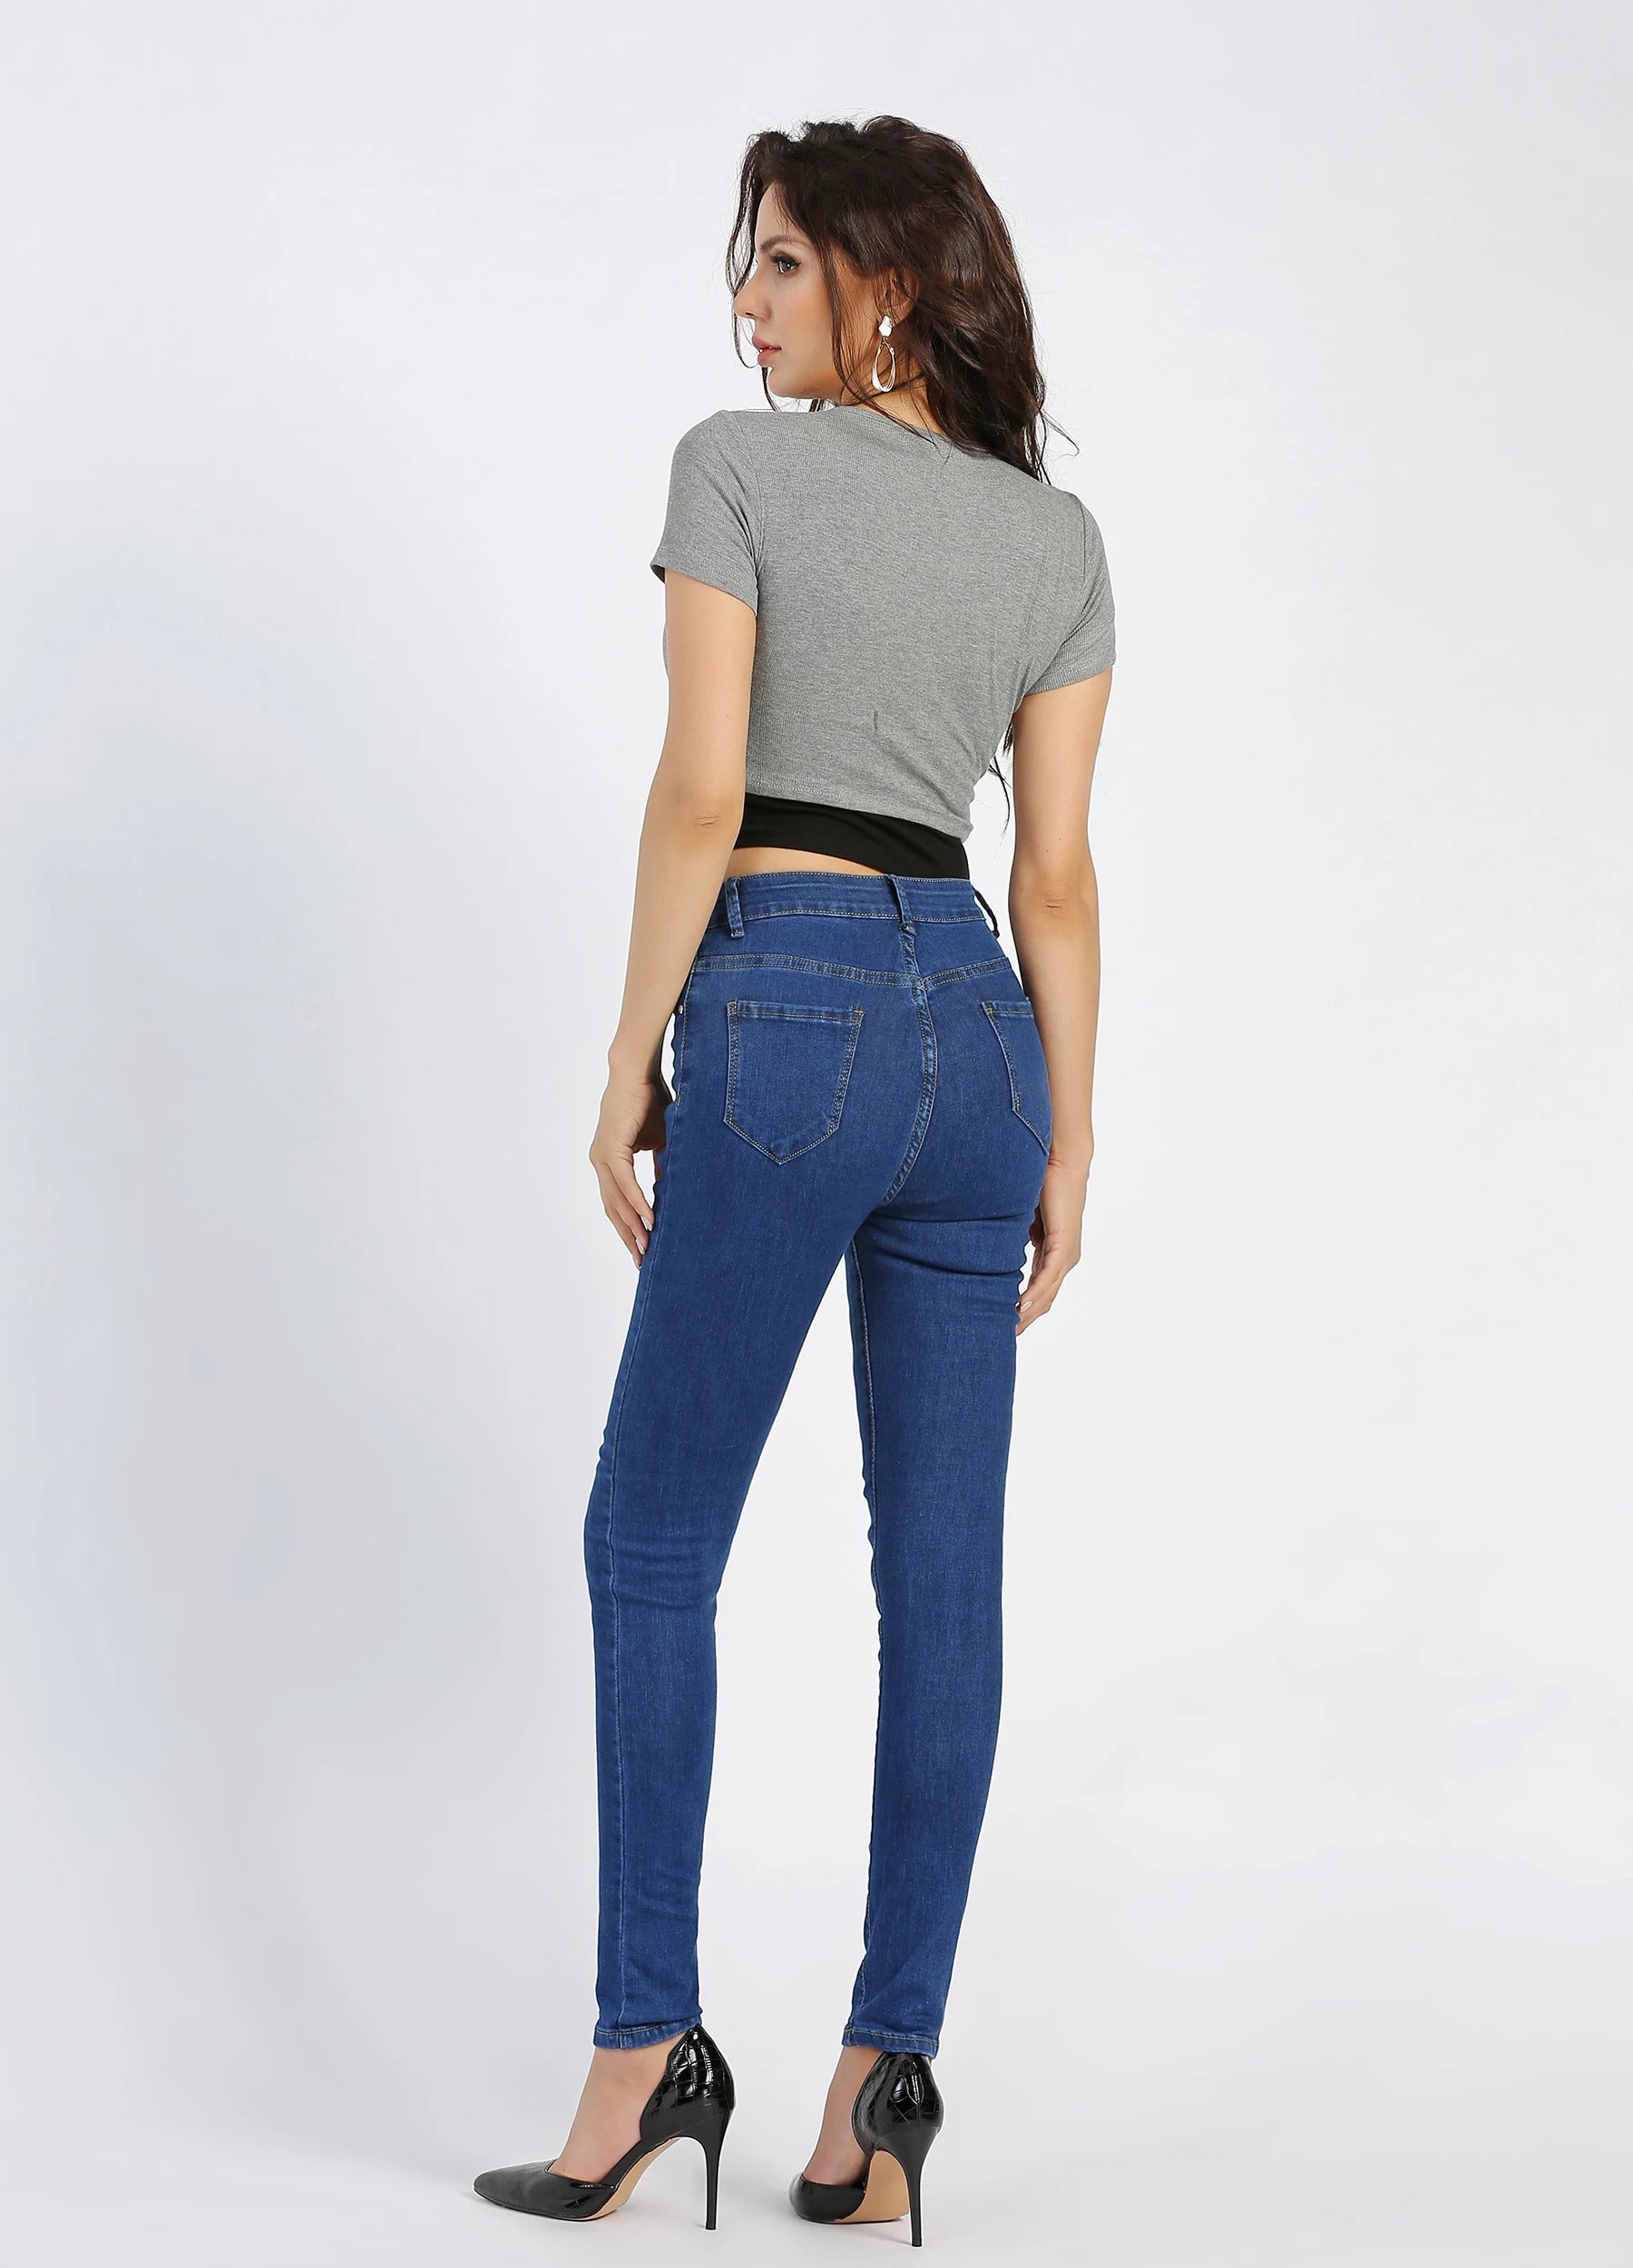 MECALA Women's High Waist Zip Closure Skinny Jeans-Dark Blue back view